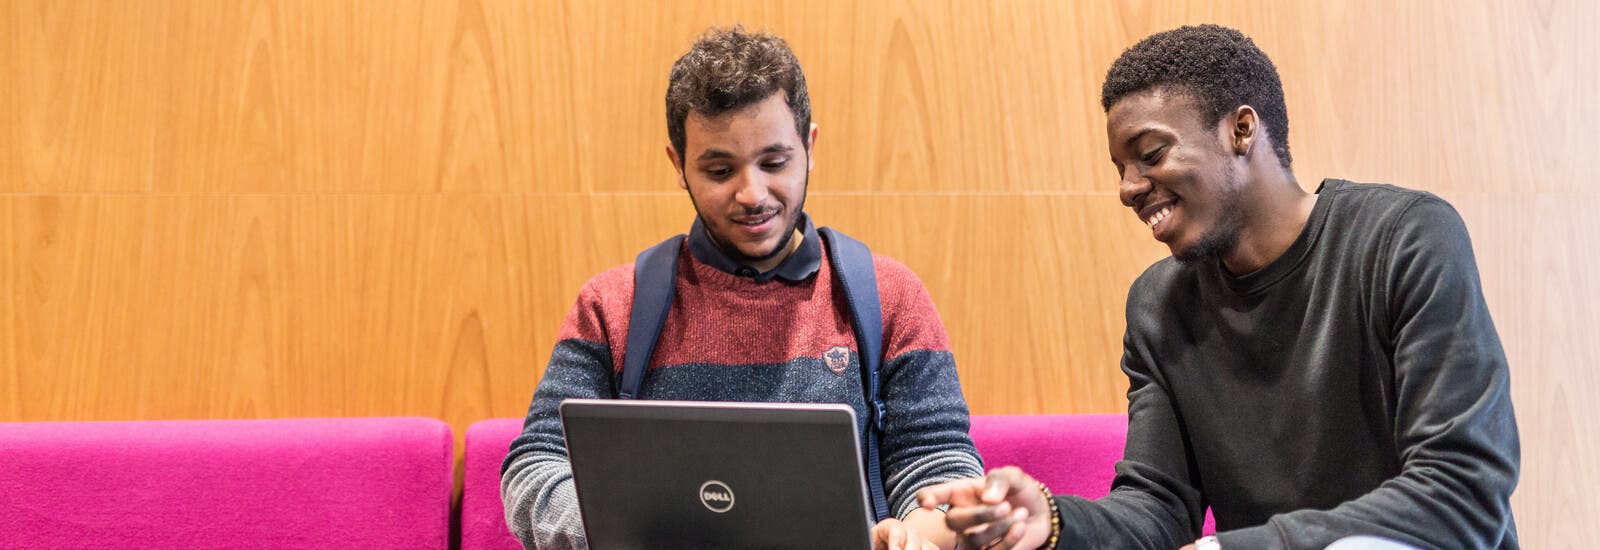 Two LJMU students using a laptop.